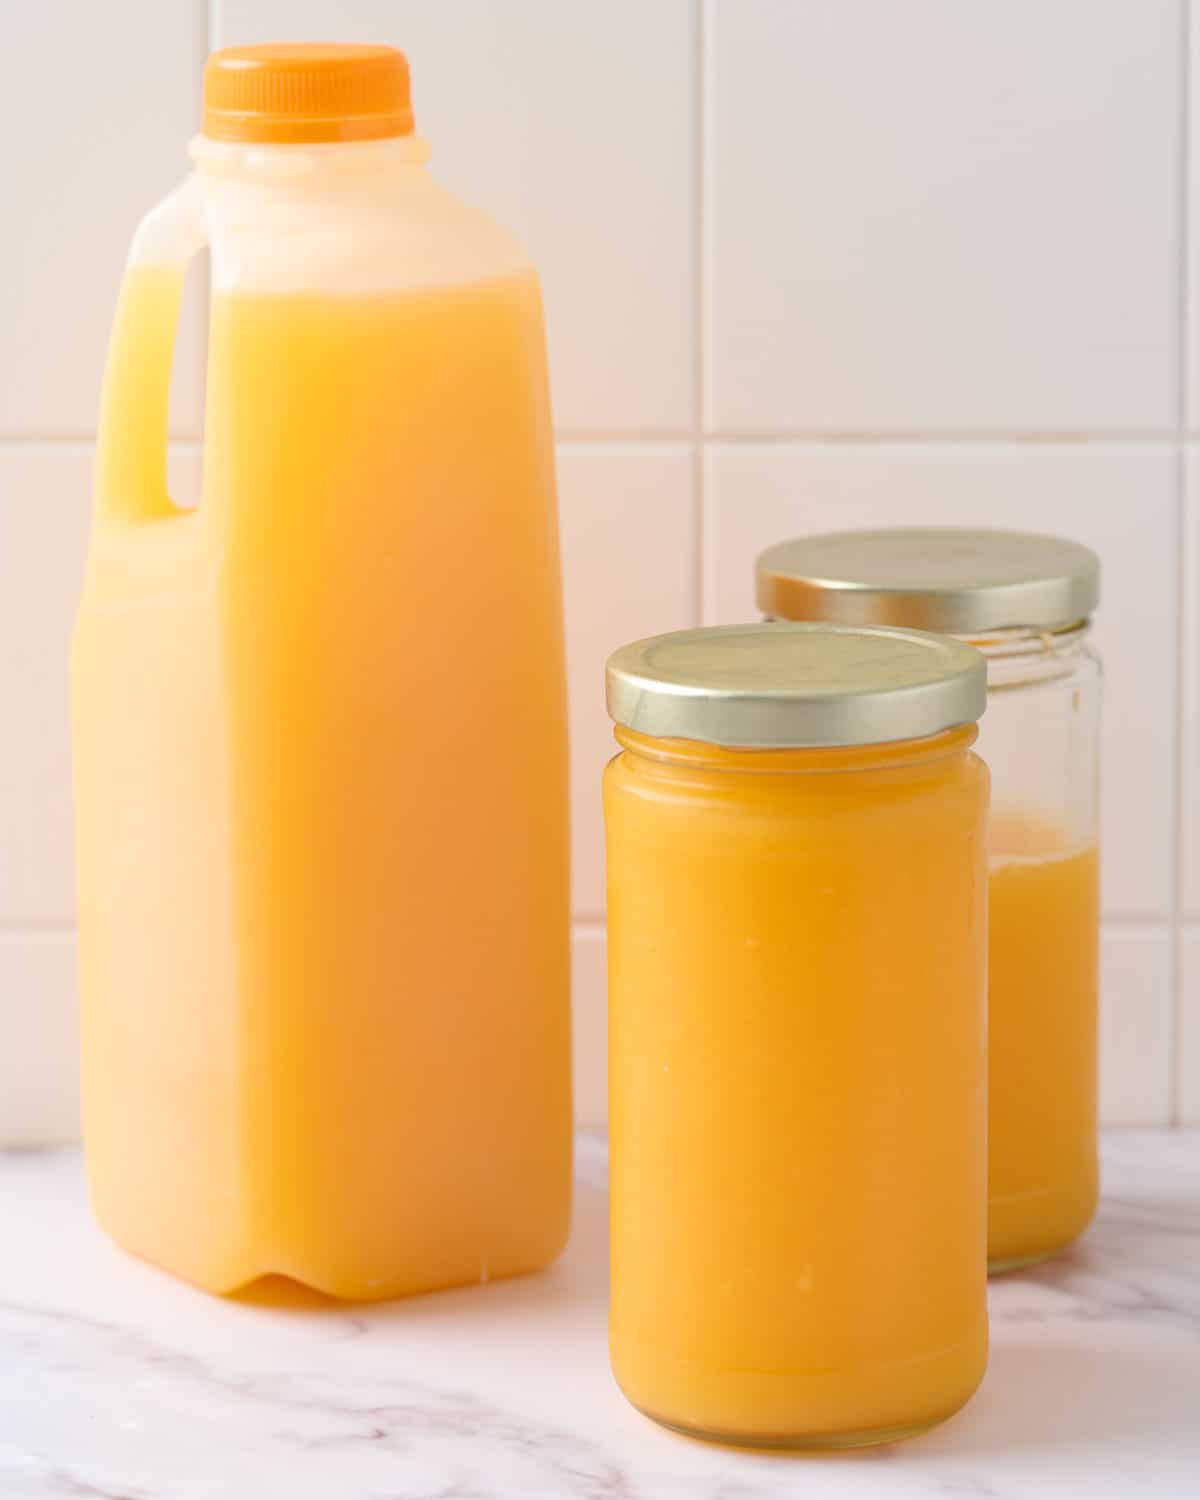 Store bought versus homemade orange juice on a countertop.